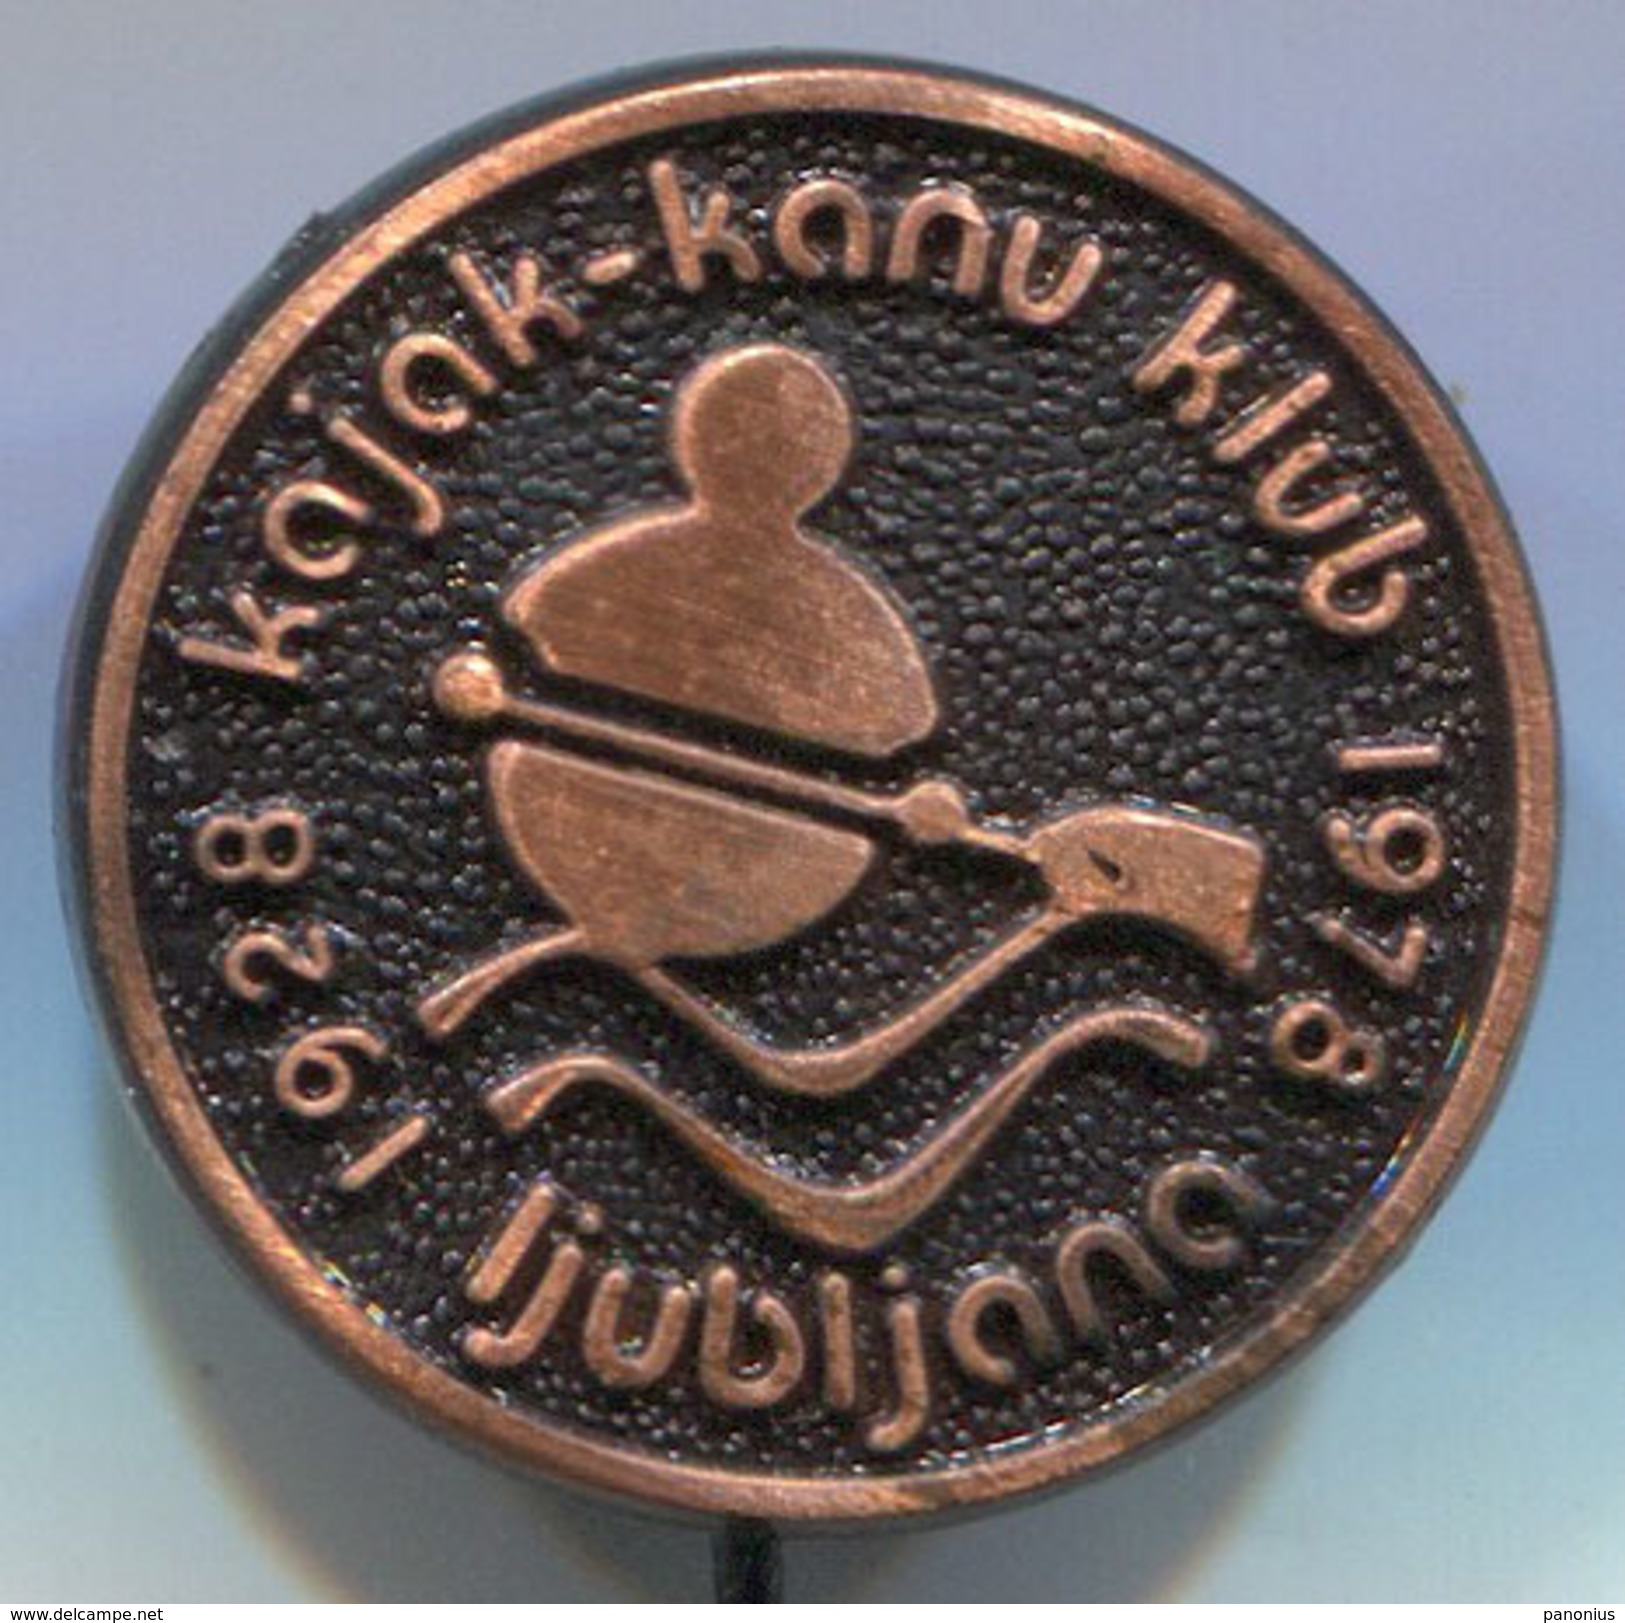 Rowing, Rudern, Canu, Kayak - Club LJUBLJANA, Slovenia, Vintage Pin, Badge, Abzeichen - Roeisport